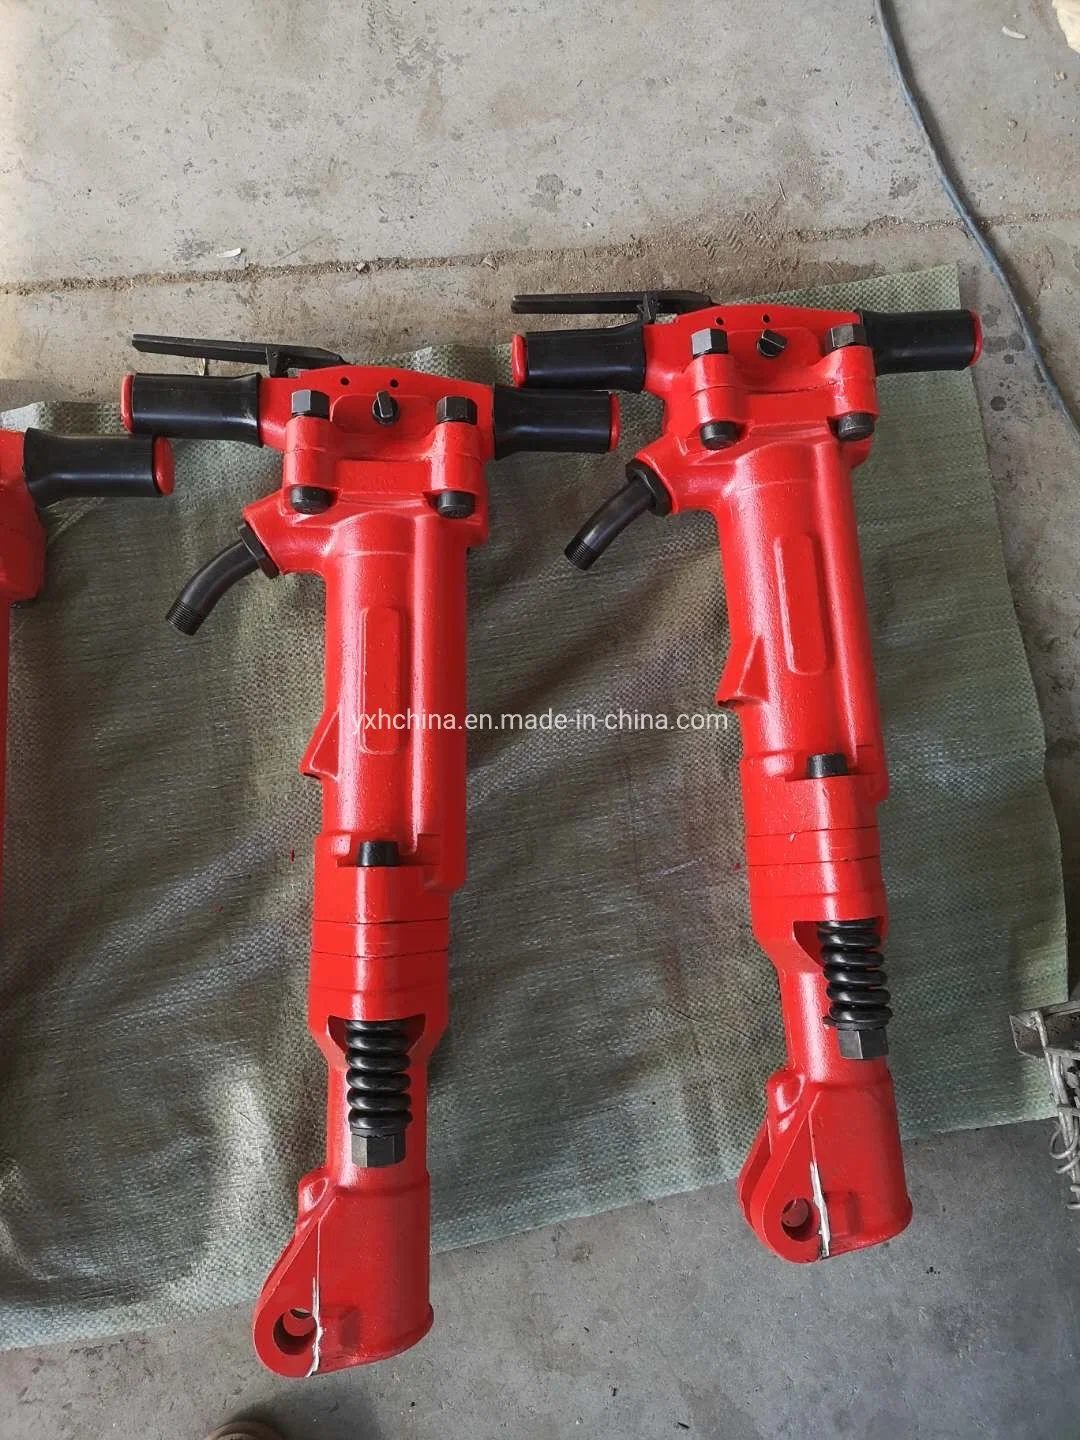 Tpb60 Tpb90 High-Efficiency Pneumatic Hammer Paving Breaker Demolition Tools China Wholesale